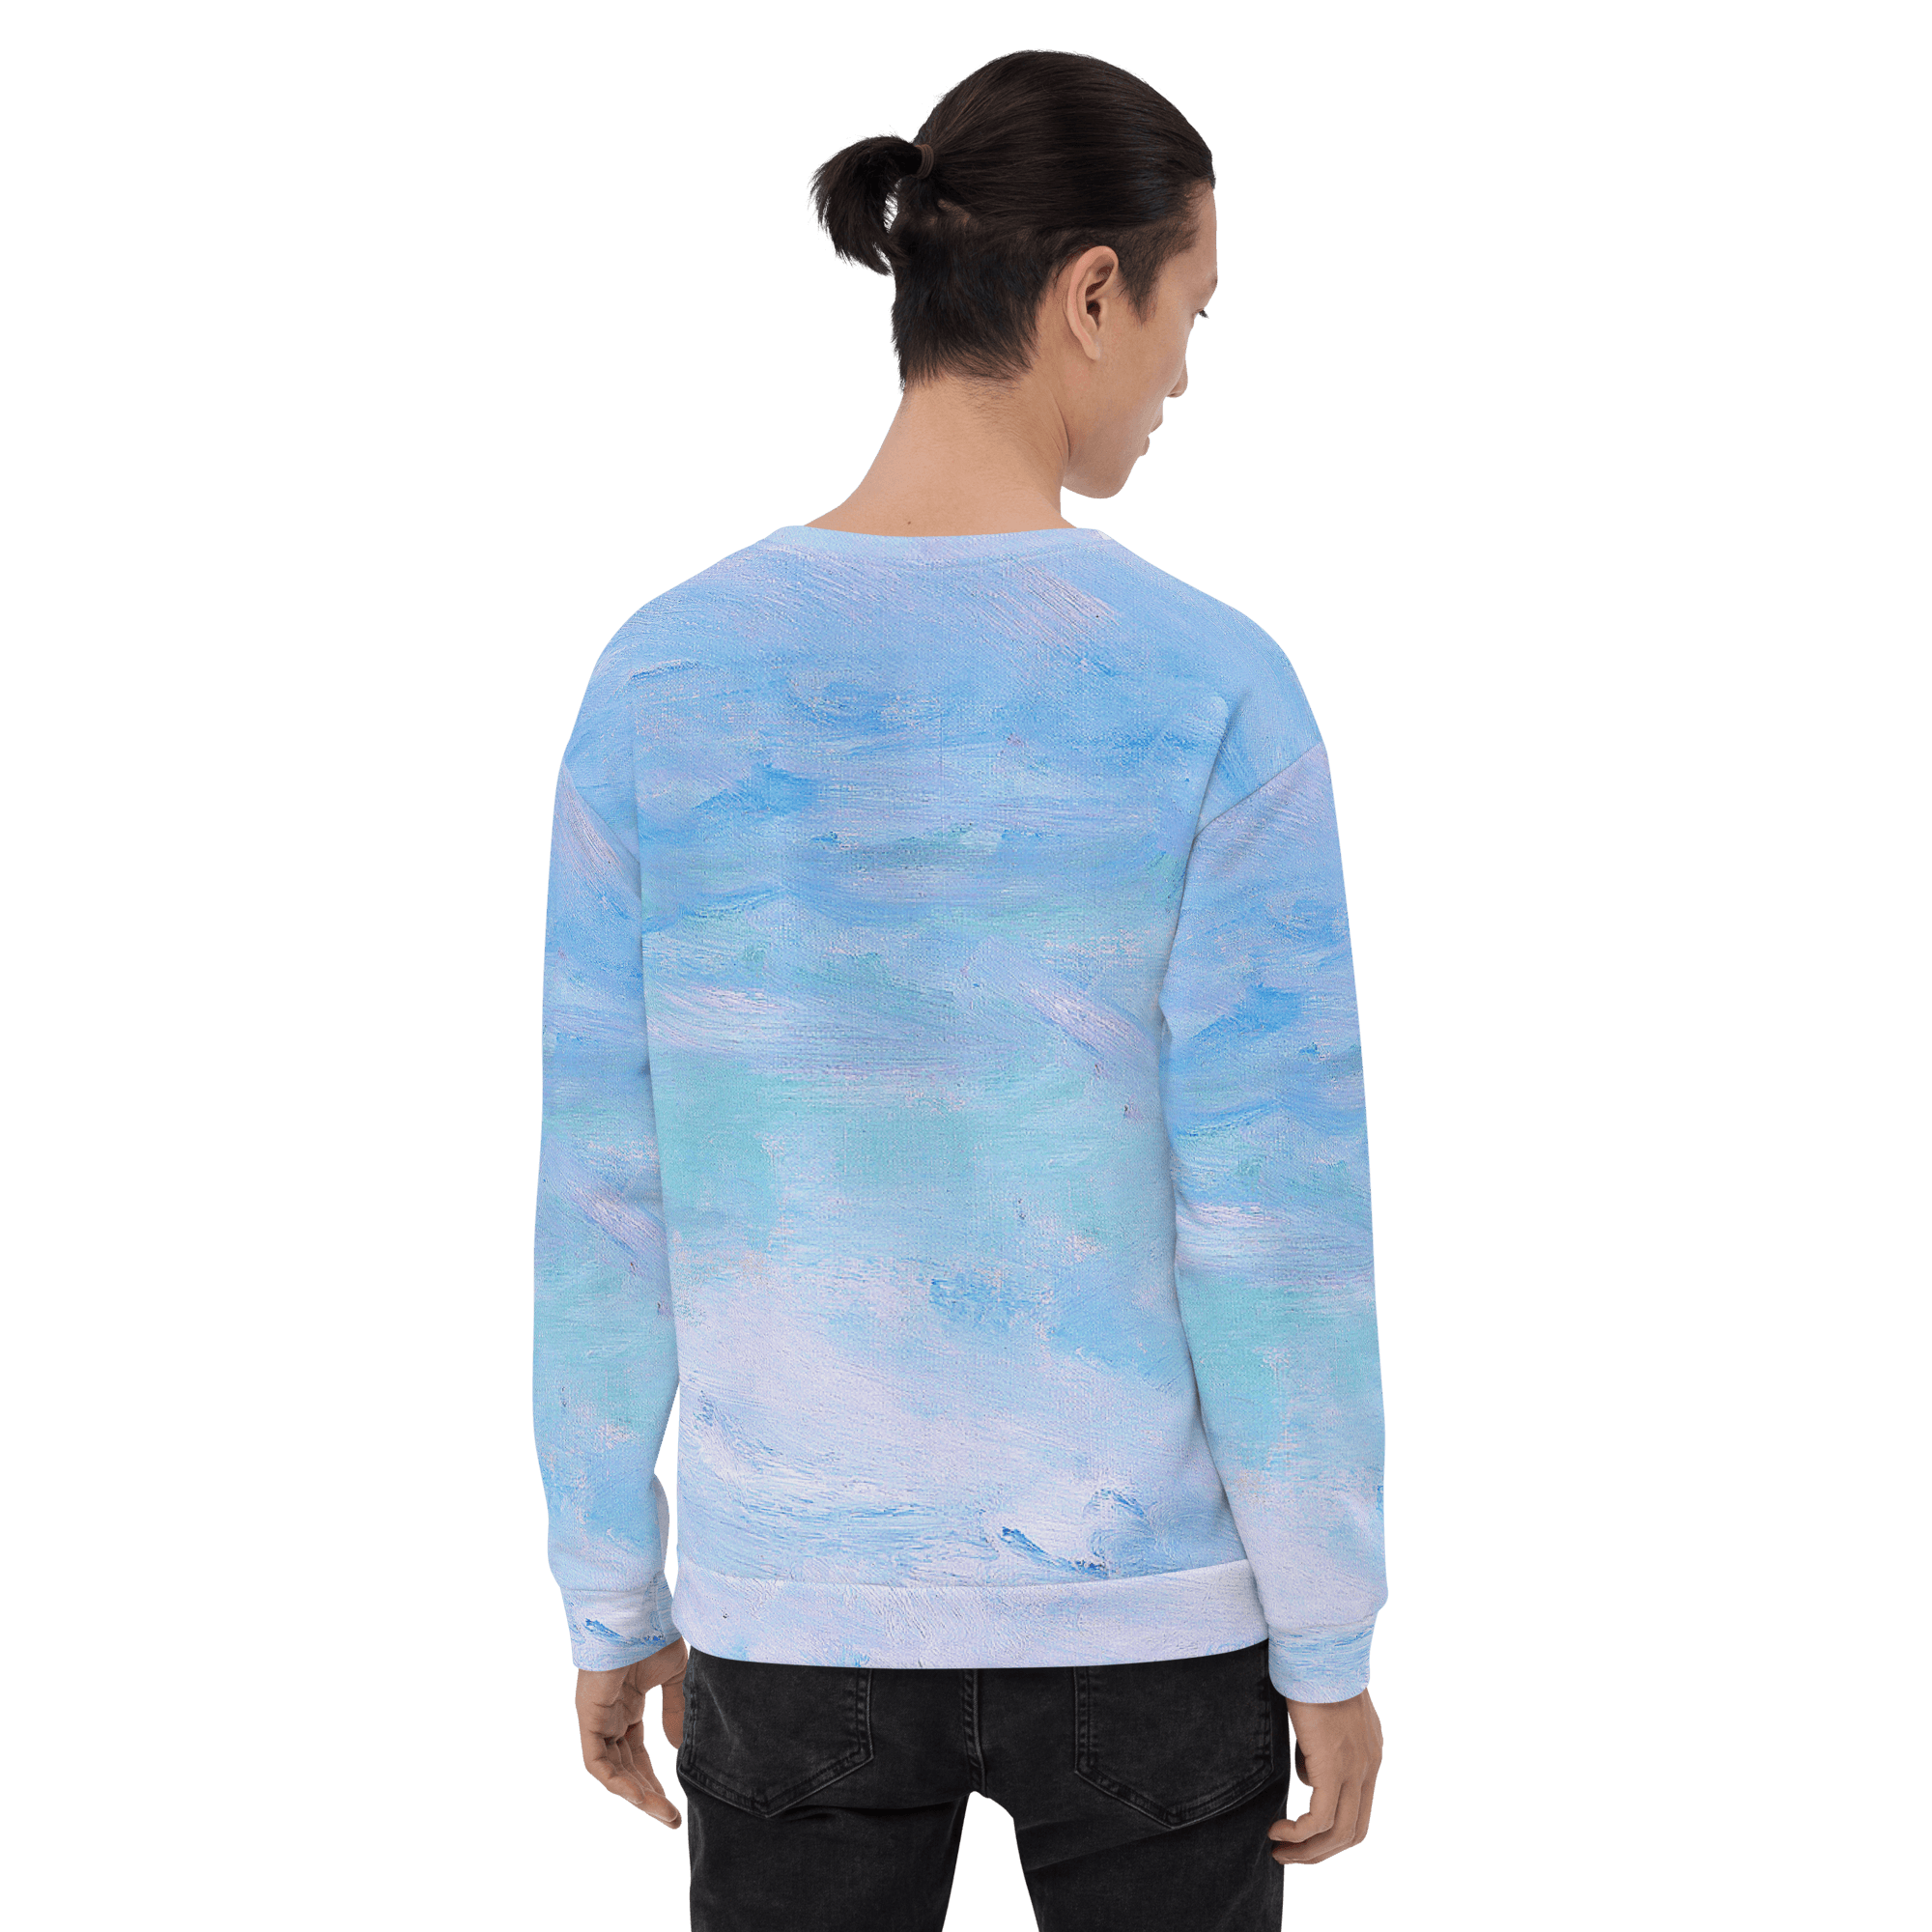 Pure® Unisex Sweatshirt (8 pieces for sale) - Kikillo Club